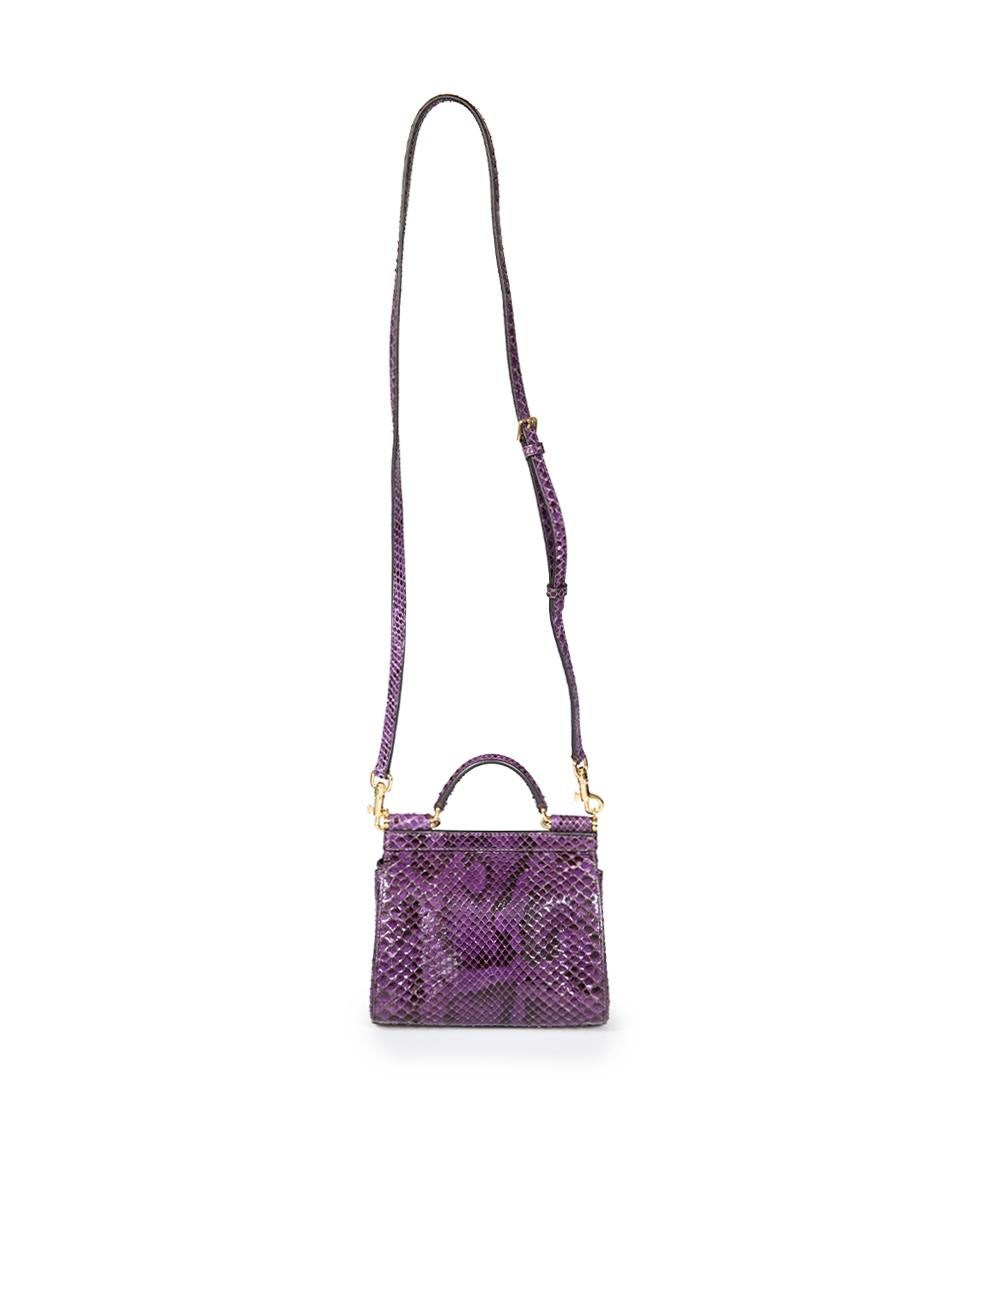 Women's Dolce & Gabbana Limited Edition Purple Snakeskin Miss Sicily Bag